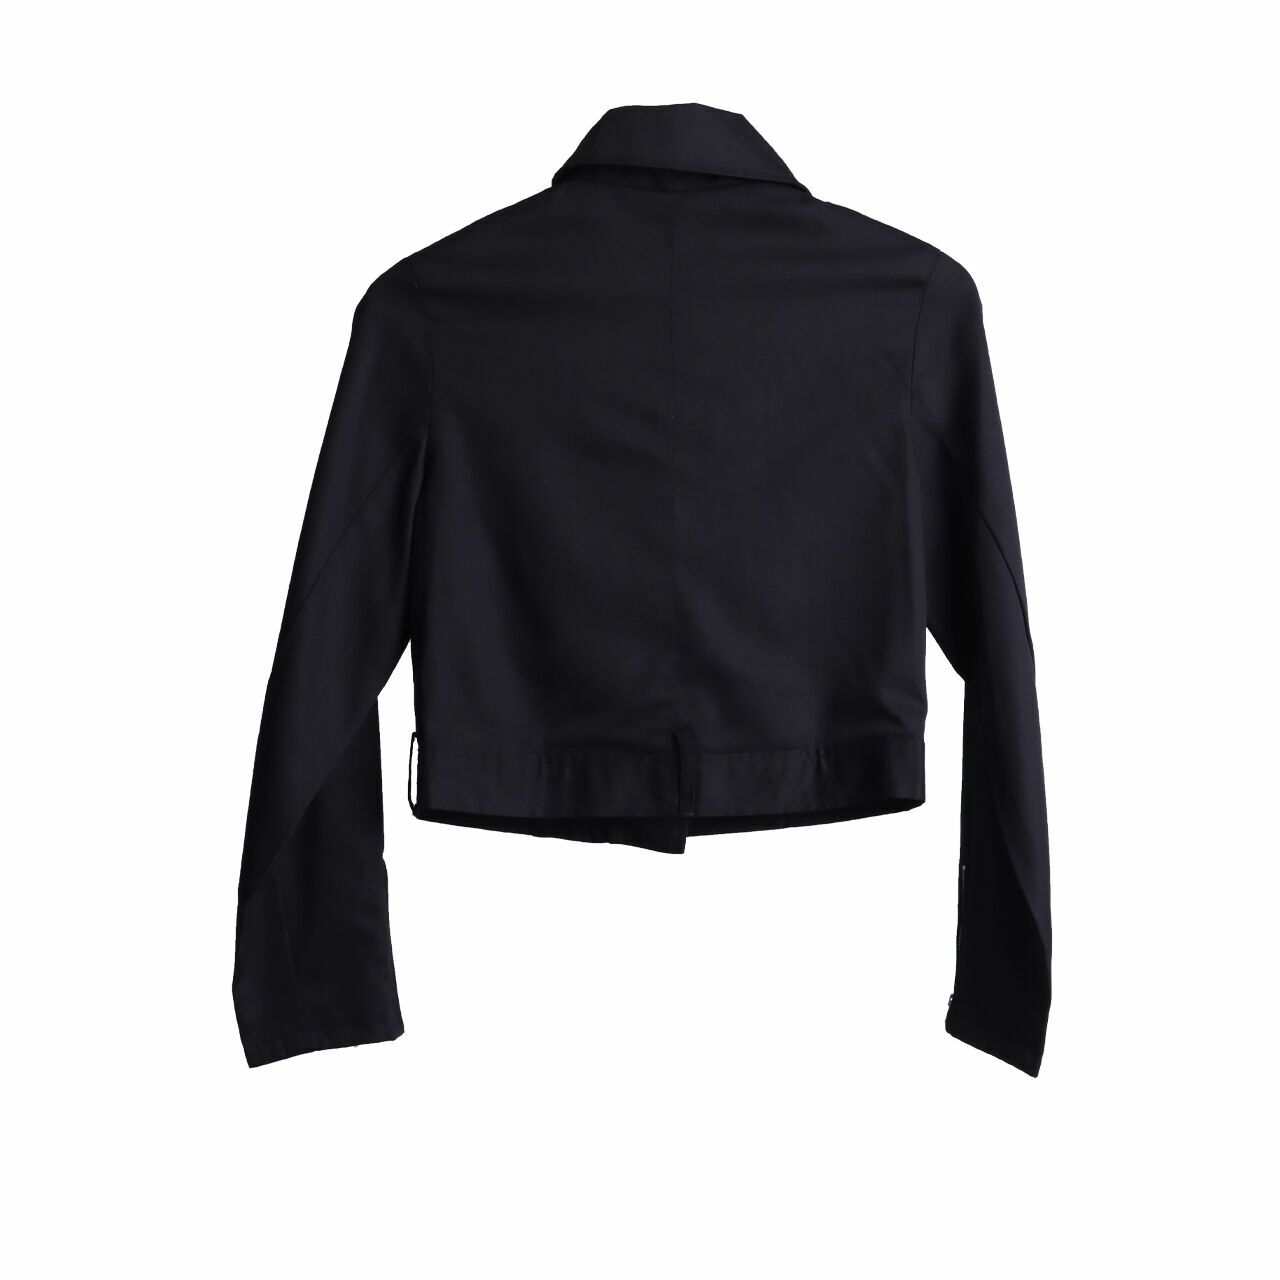 Cloth Inc Black Jacket